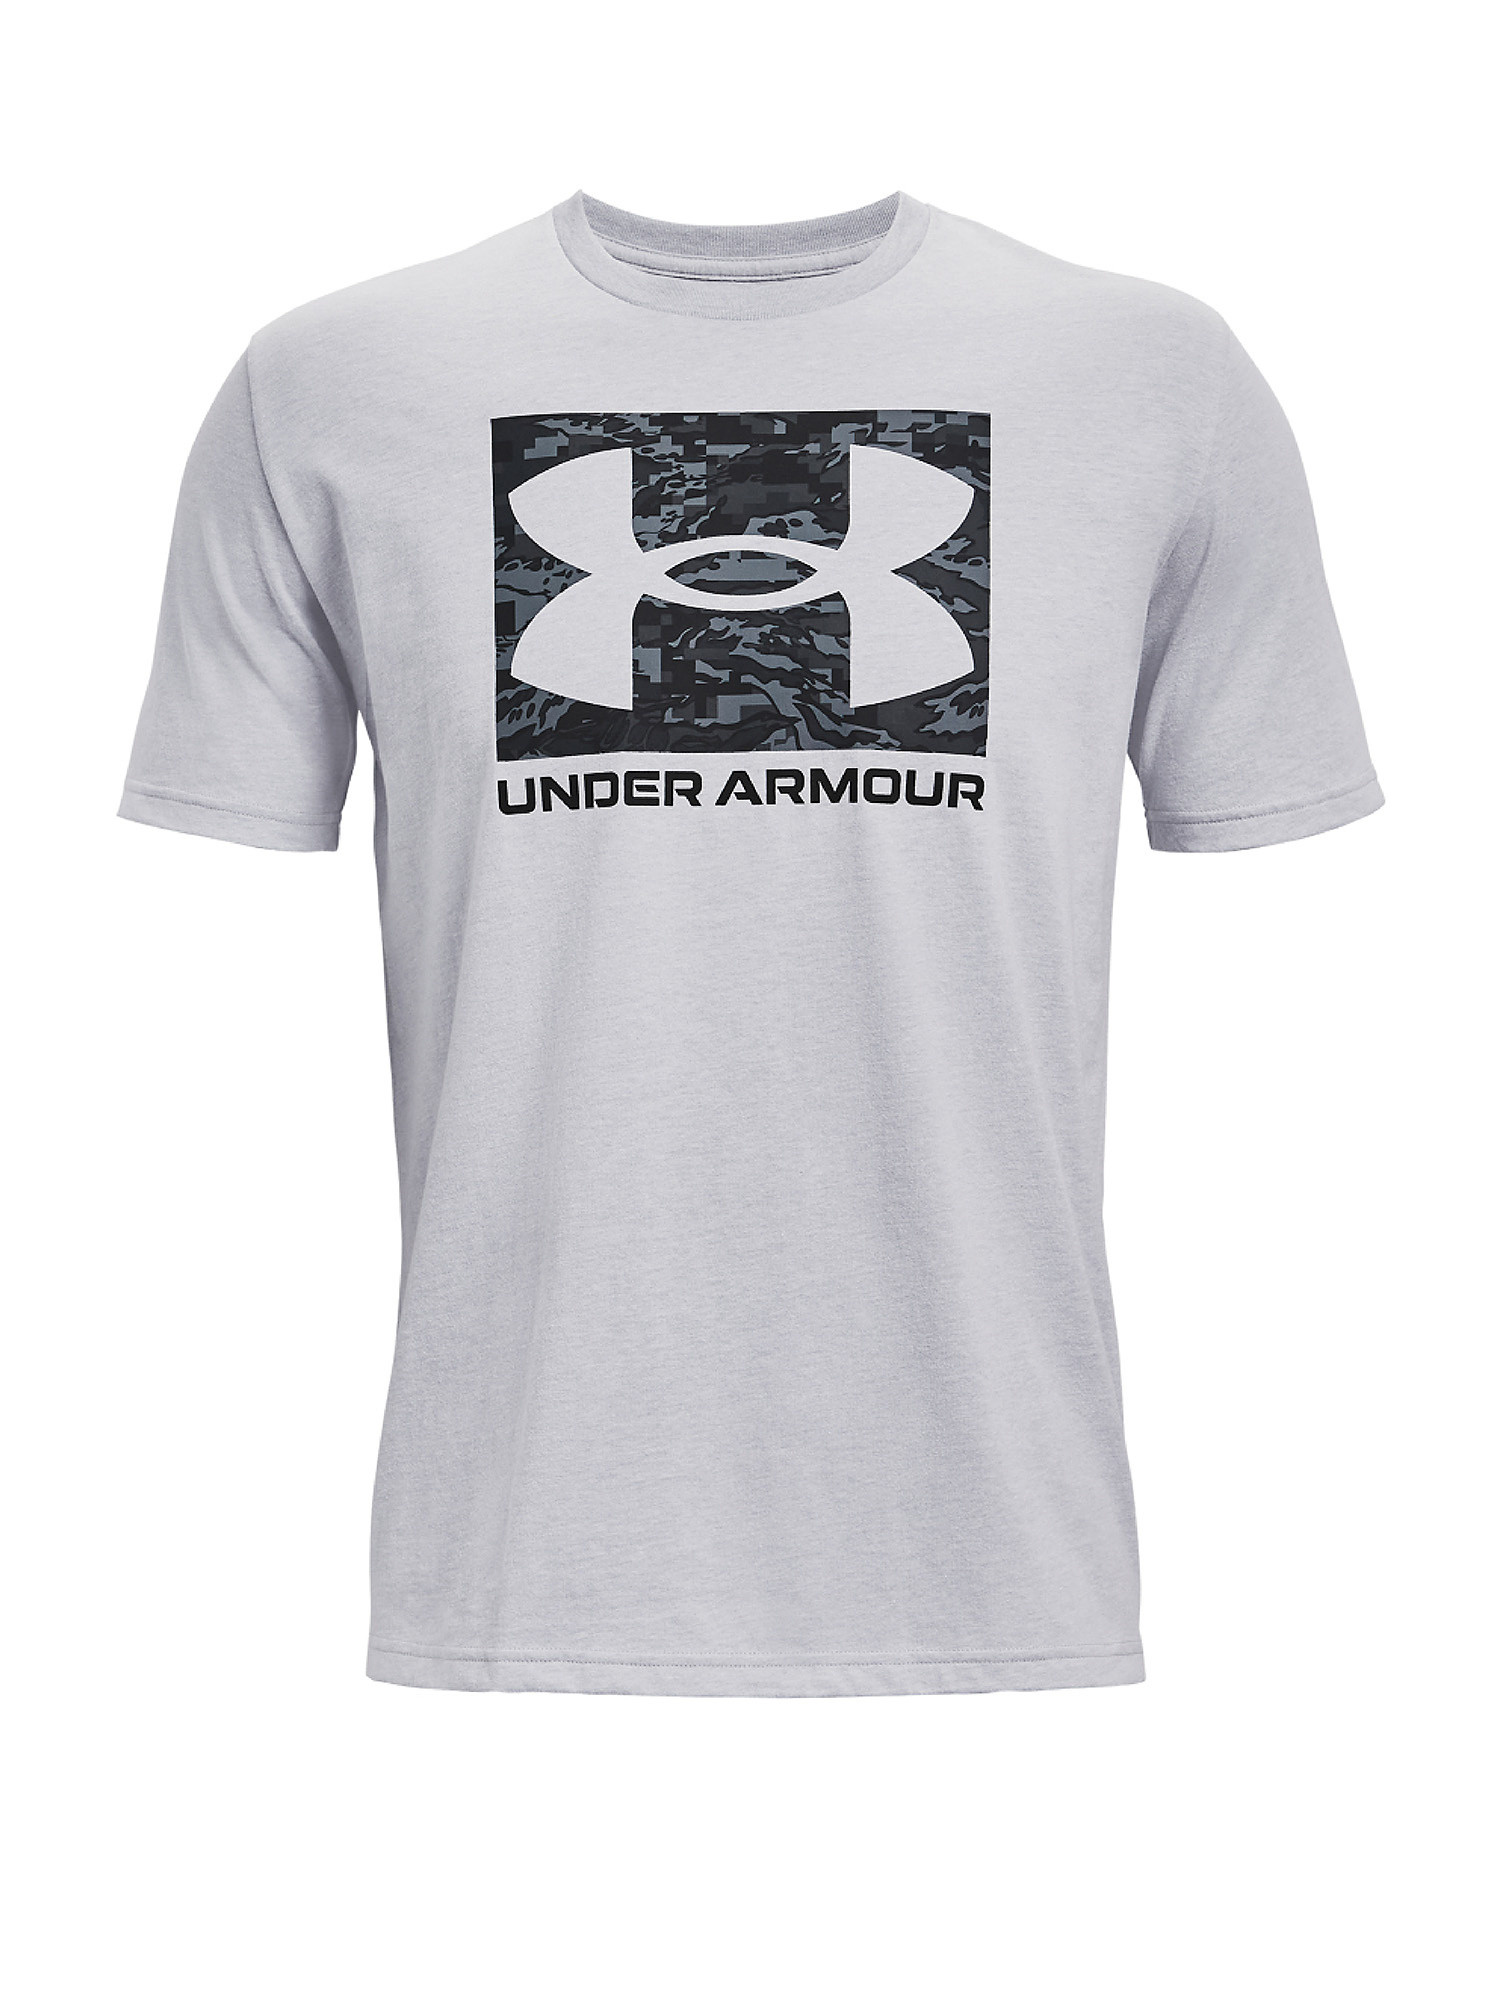 Under Armour - UA ABC Camo Boxed Logo Short Sleeve Jersey, Light Grey, large image number 0